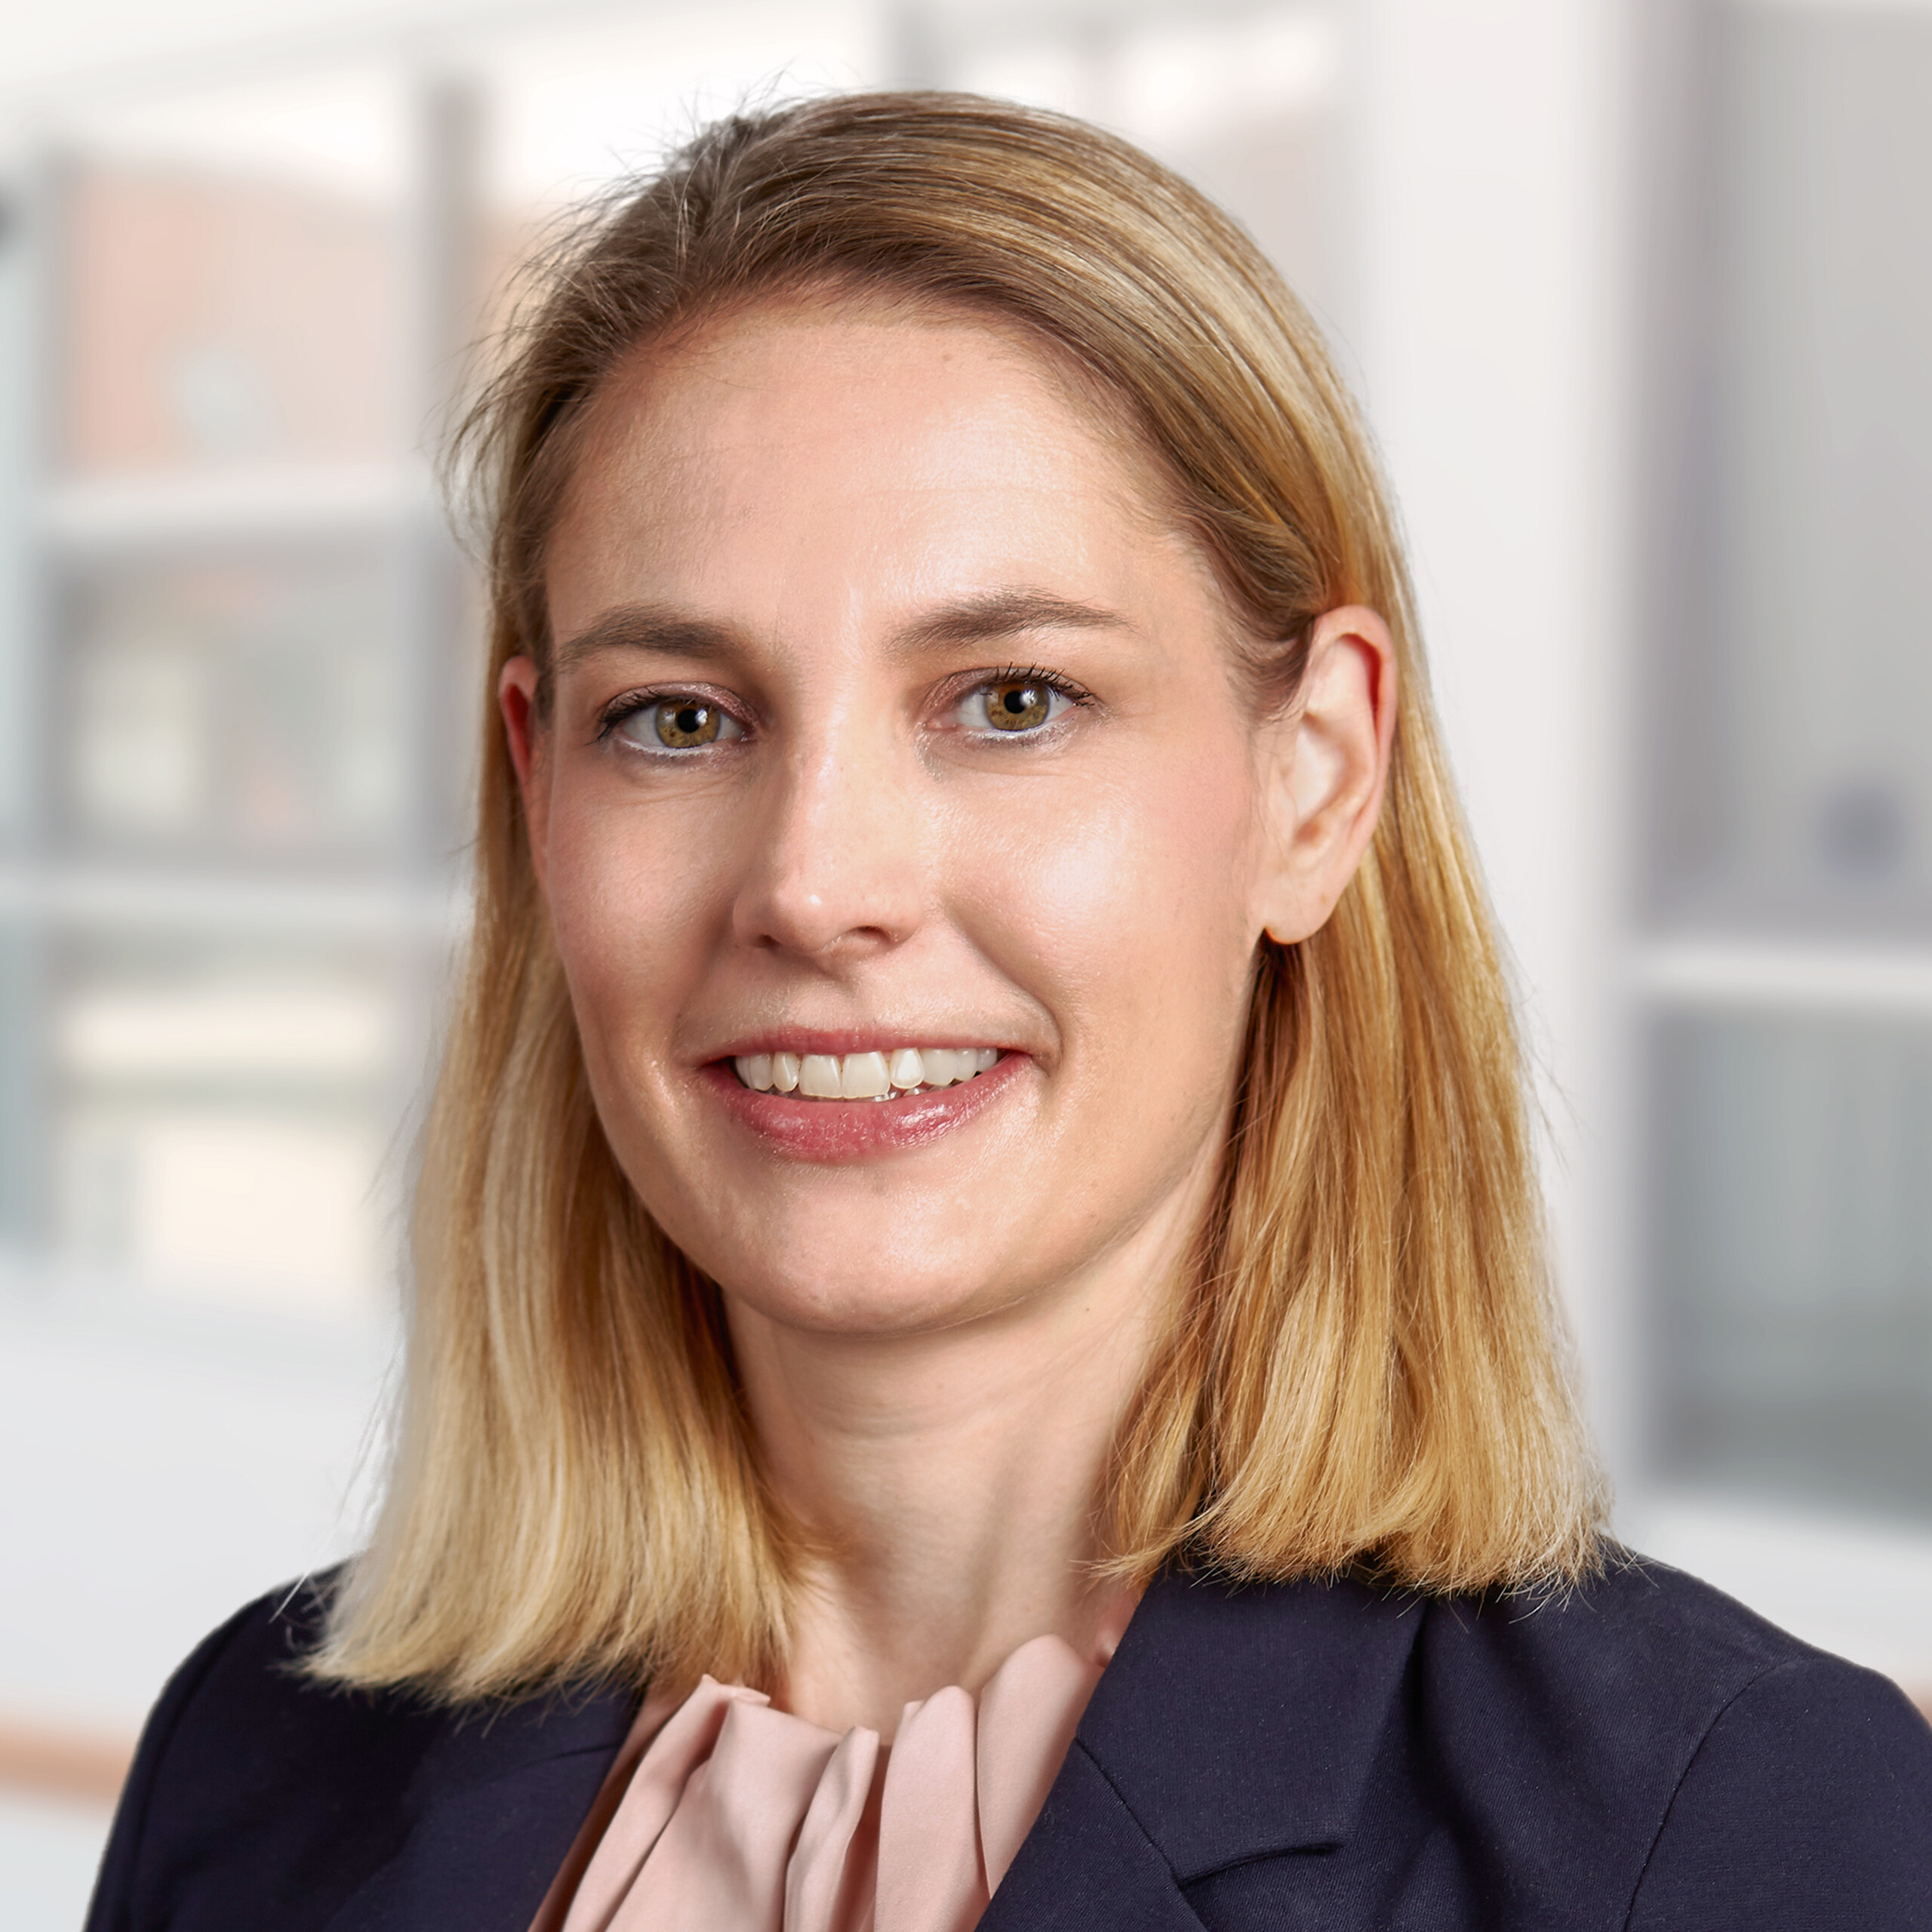 Nicole Pötsch, Head of Investment & Strategic Development, North & Central Europe, Allianz Real Estate